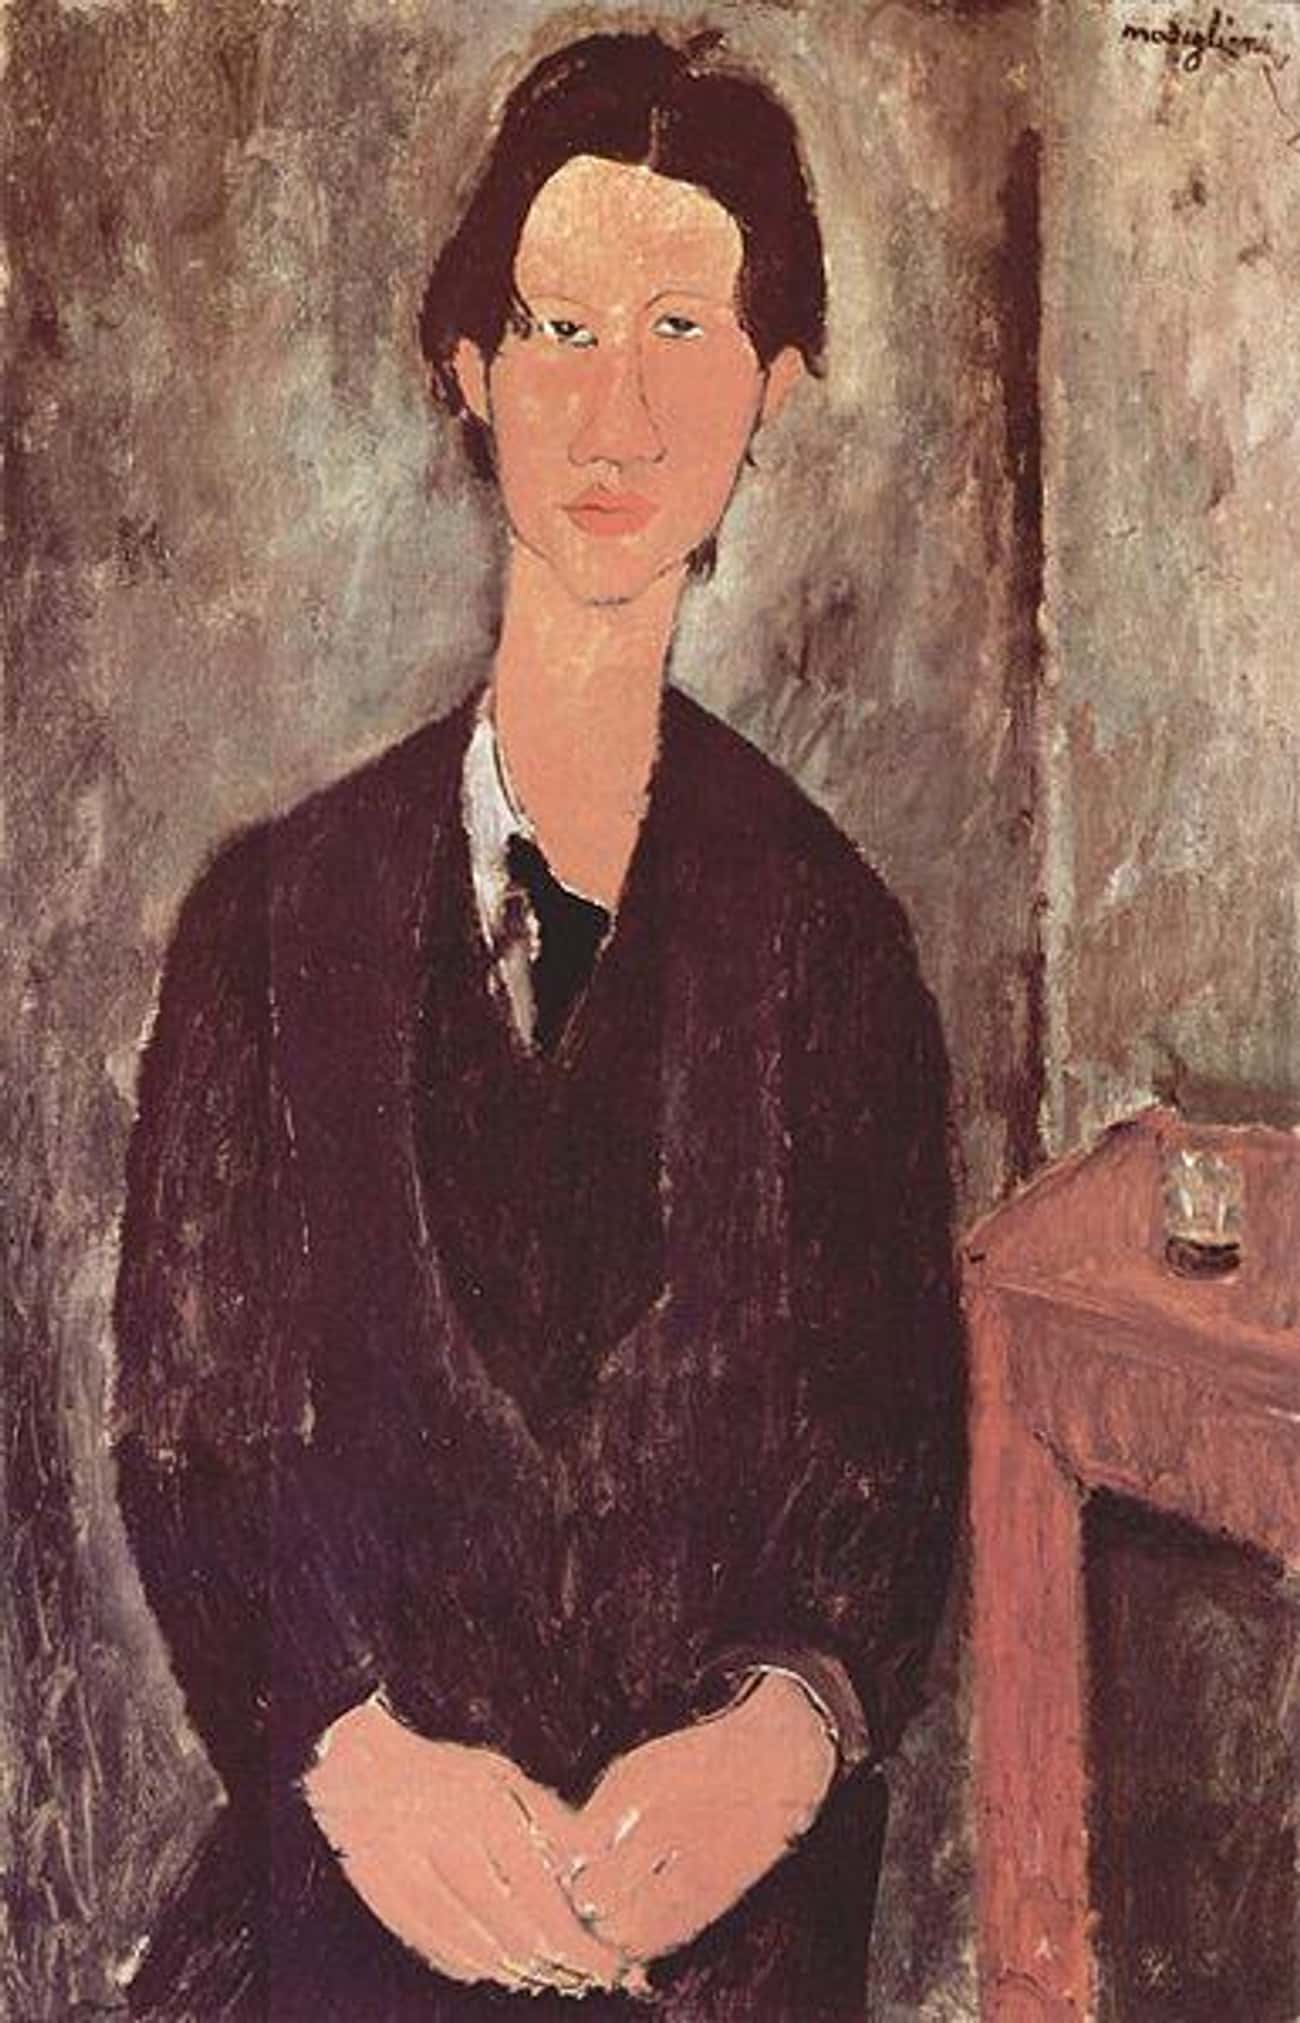 Portrait of Chaim Soutine